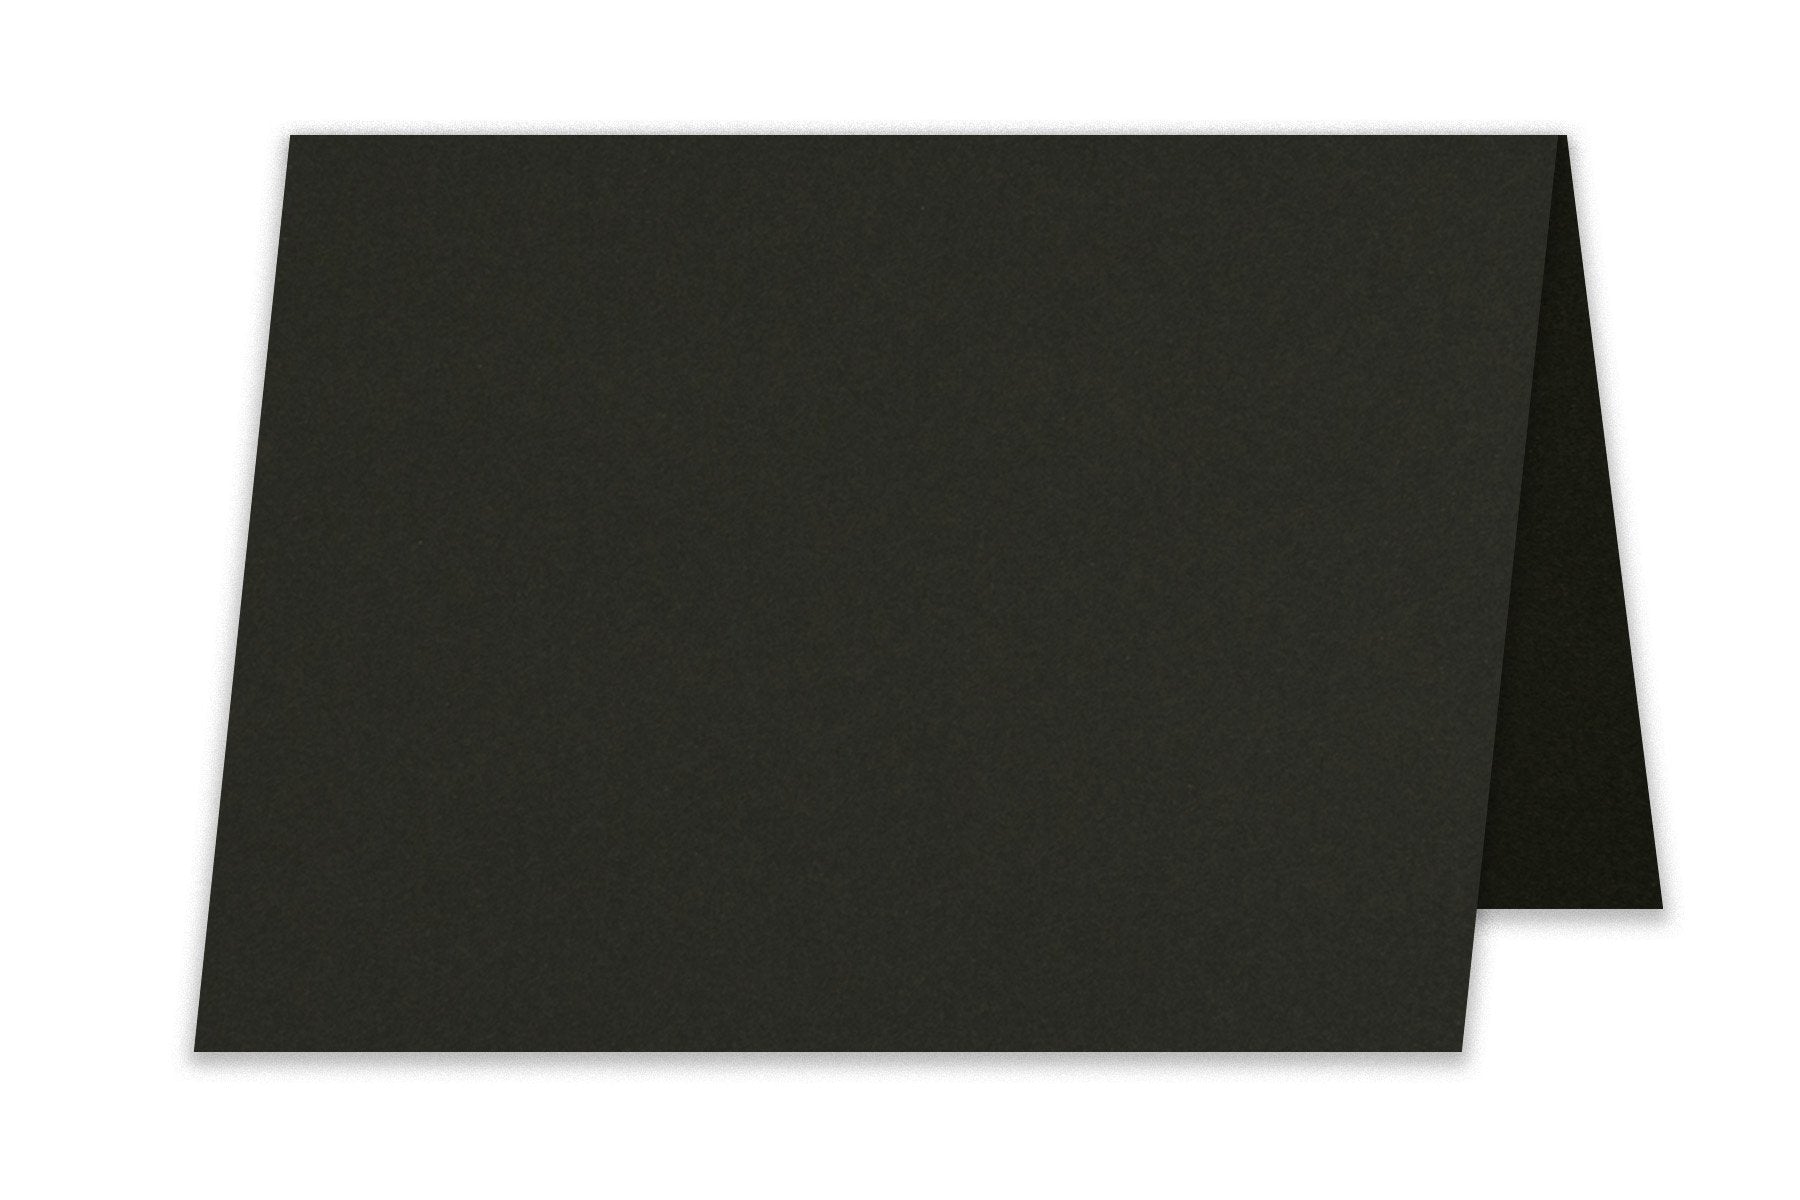 Pop Tone BLACK LICORICE 8.5x11 Discount Card Stock - CutCardStock